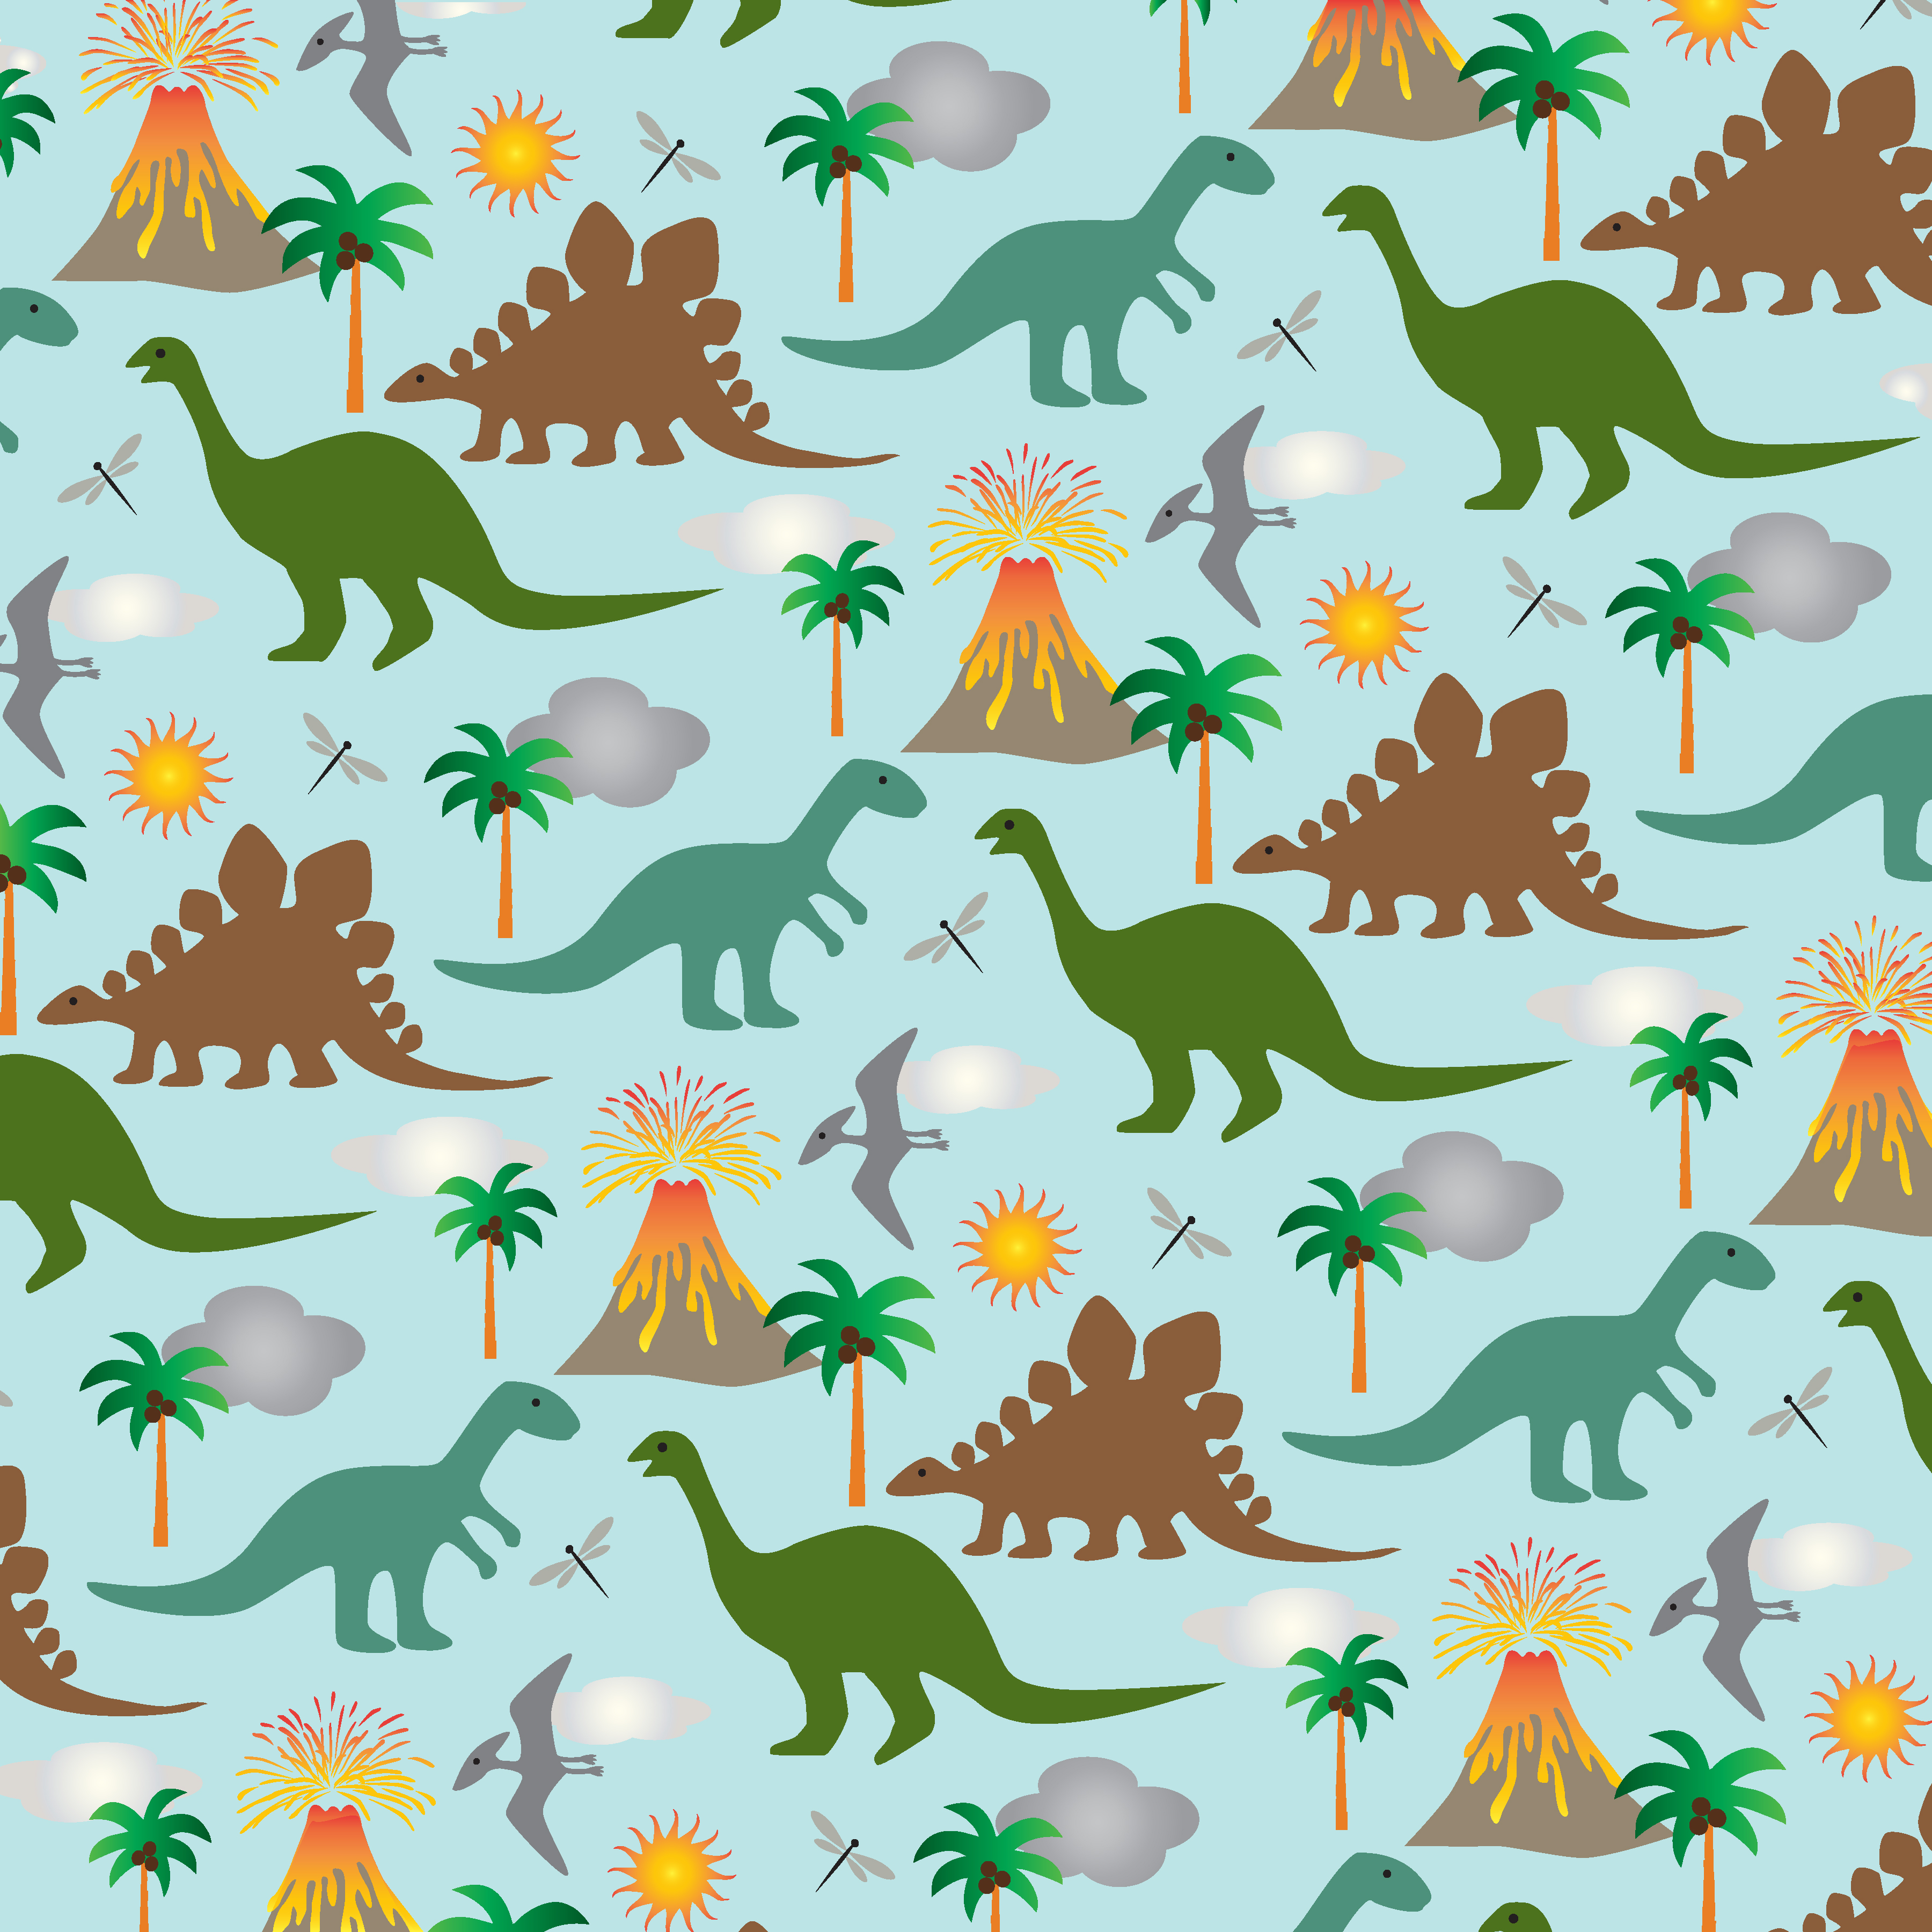 dinosaur scene background pattern 335324 Download Free Vectors